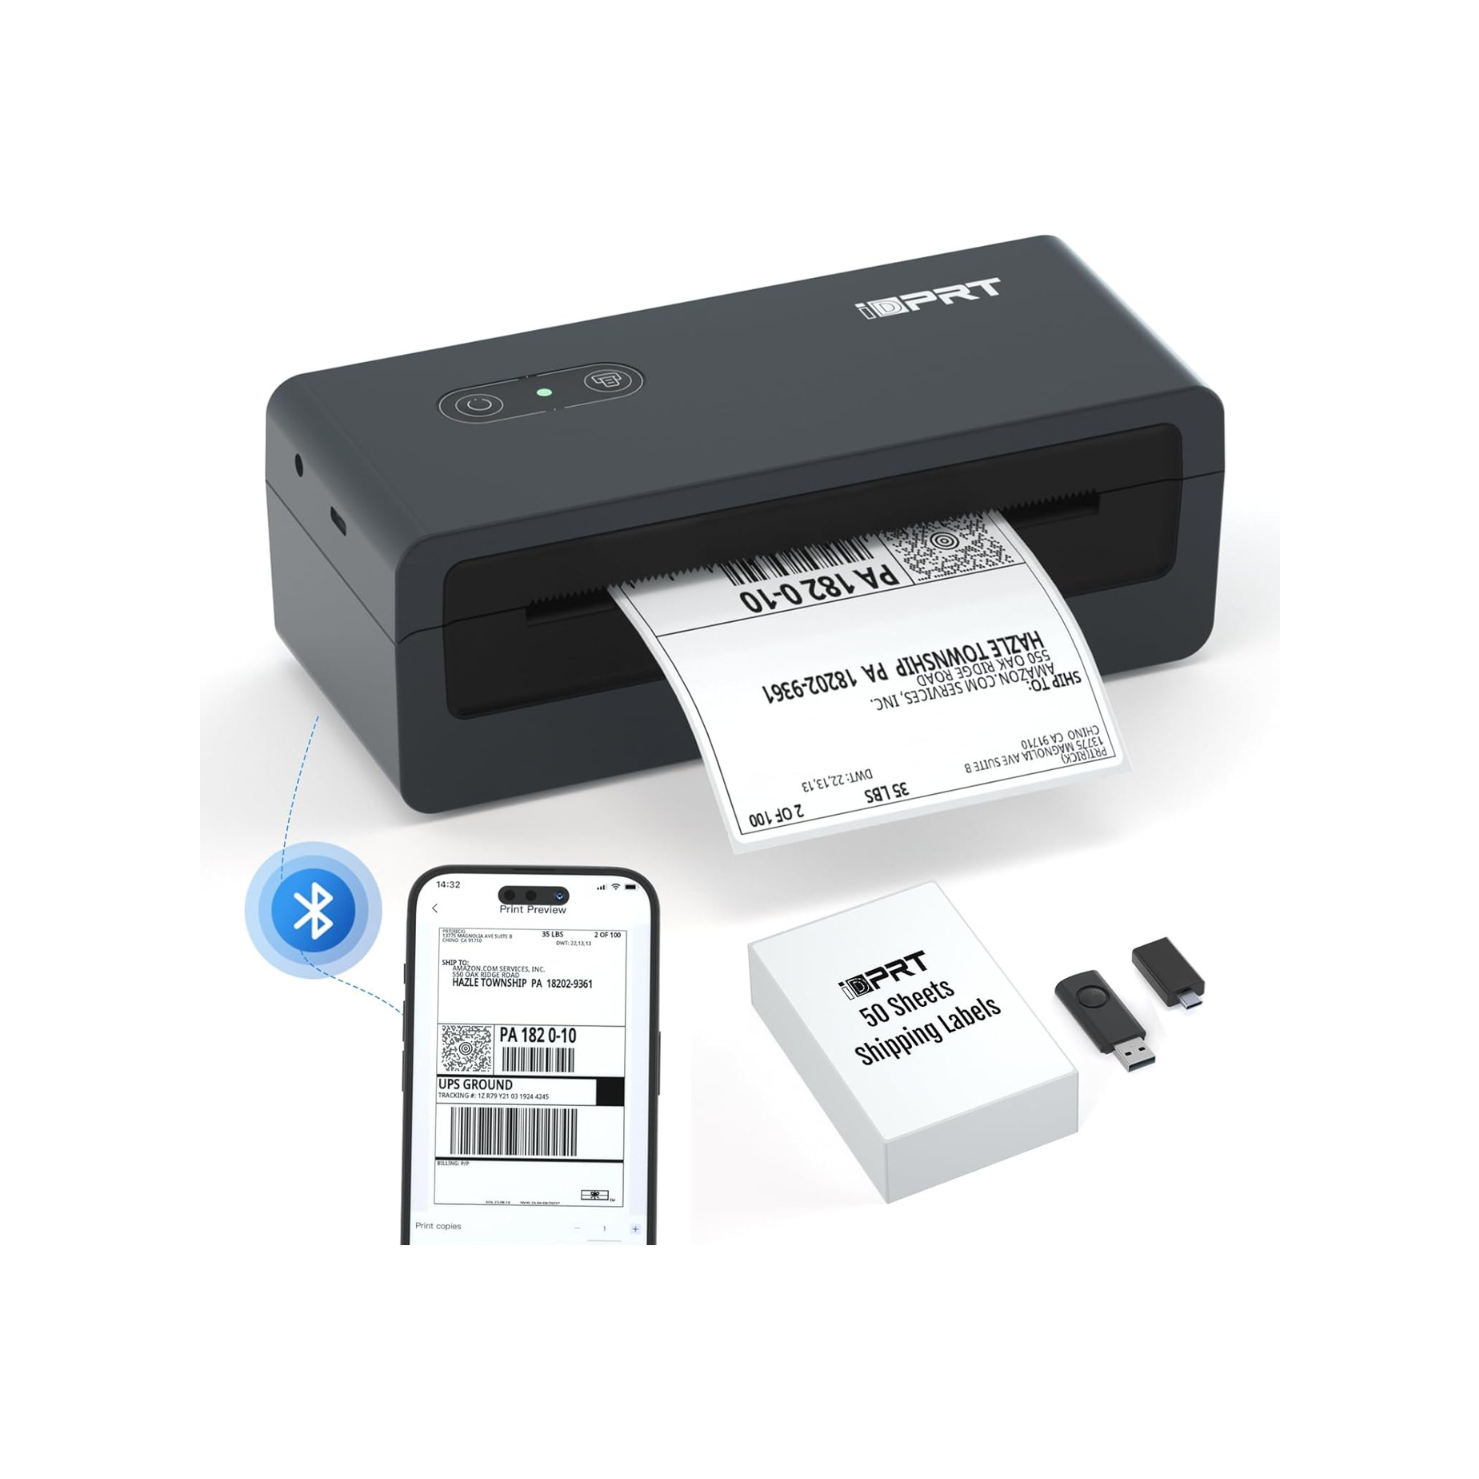 iDPRT Bluetooth Thermal Label Printer